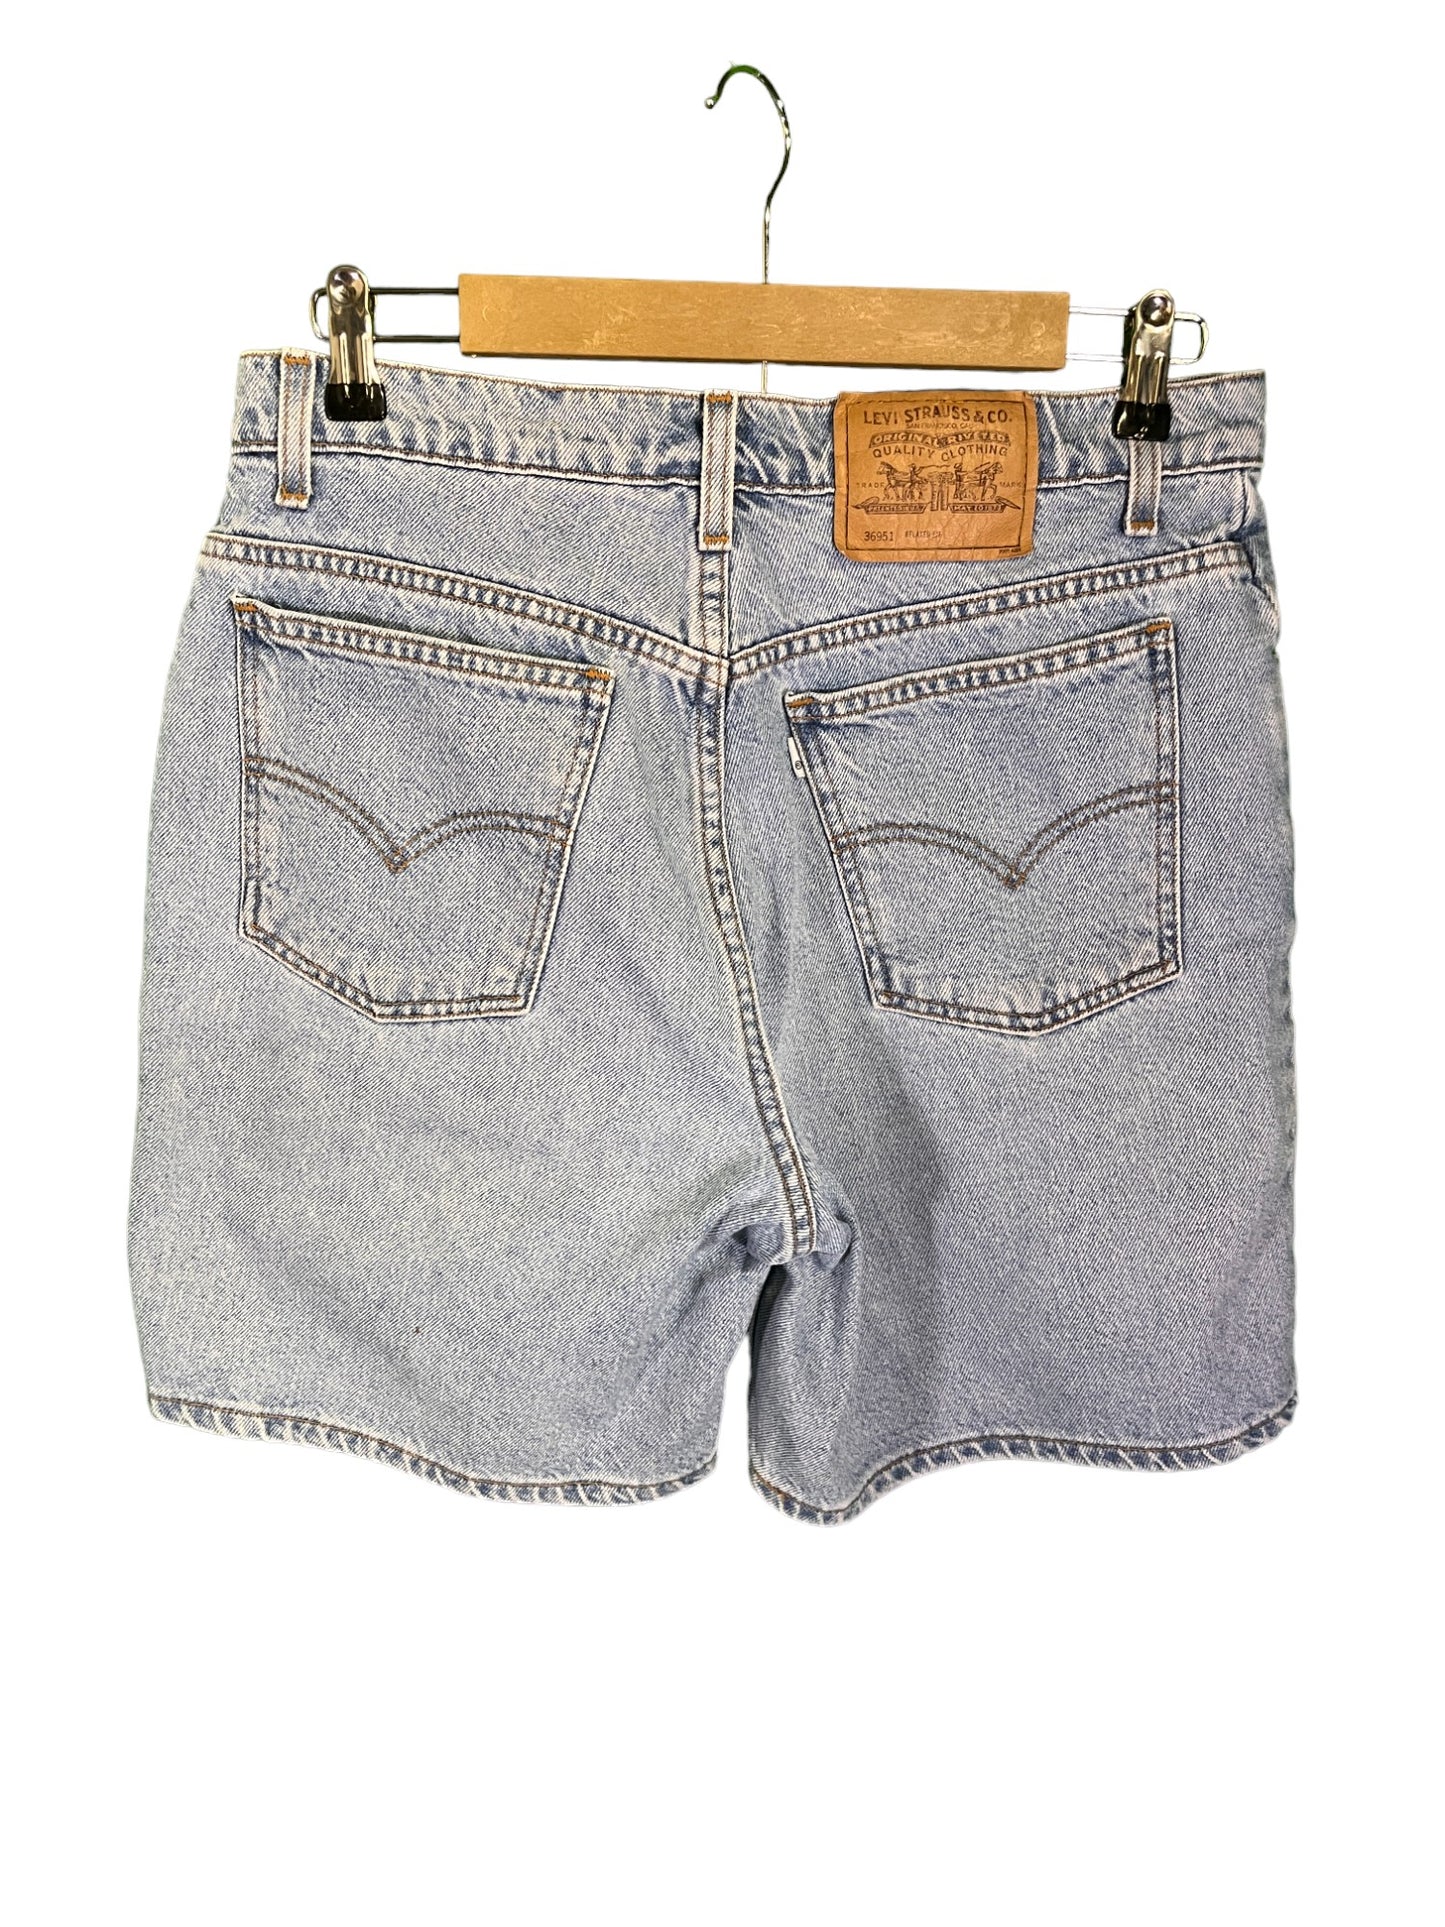 Vintage Levi's 950 Orange Tab Light Wash Denim Shorts Size 34